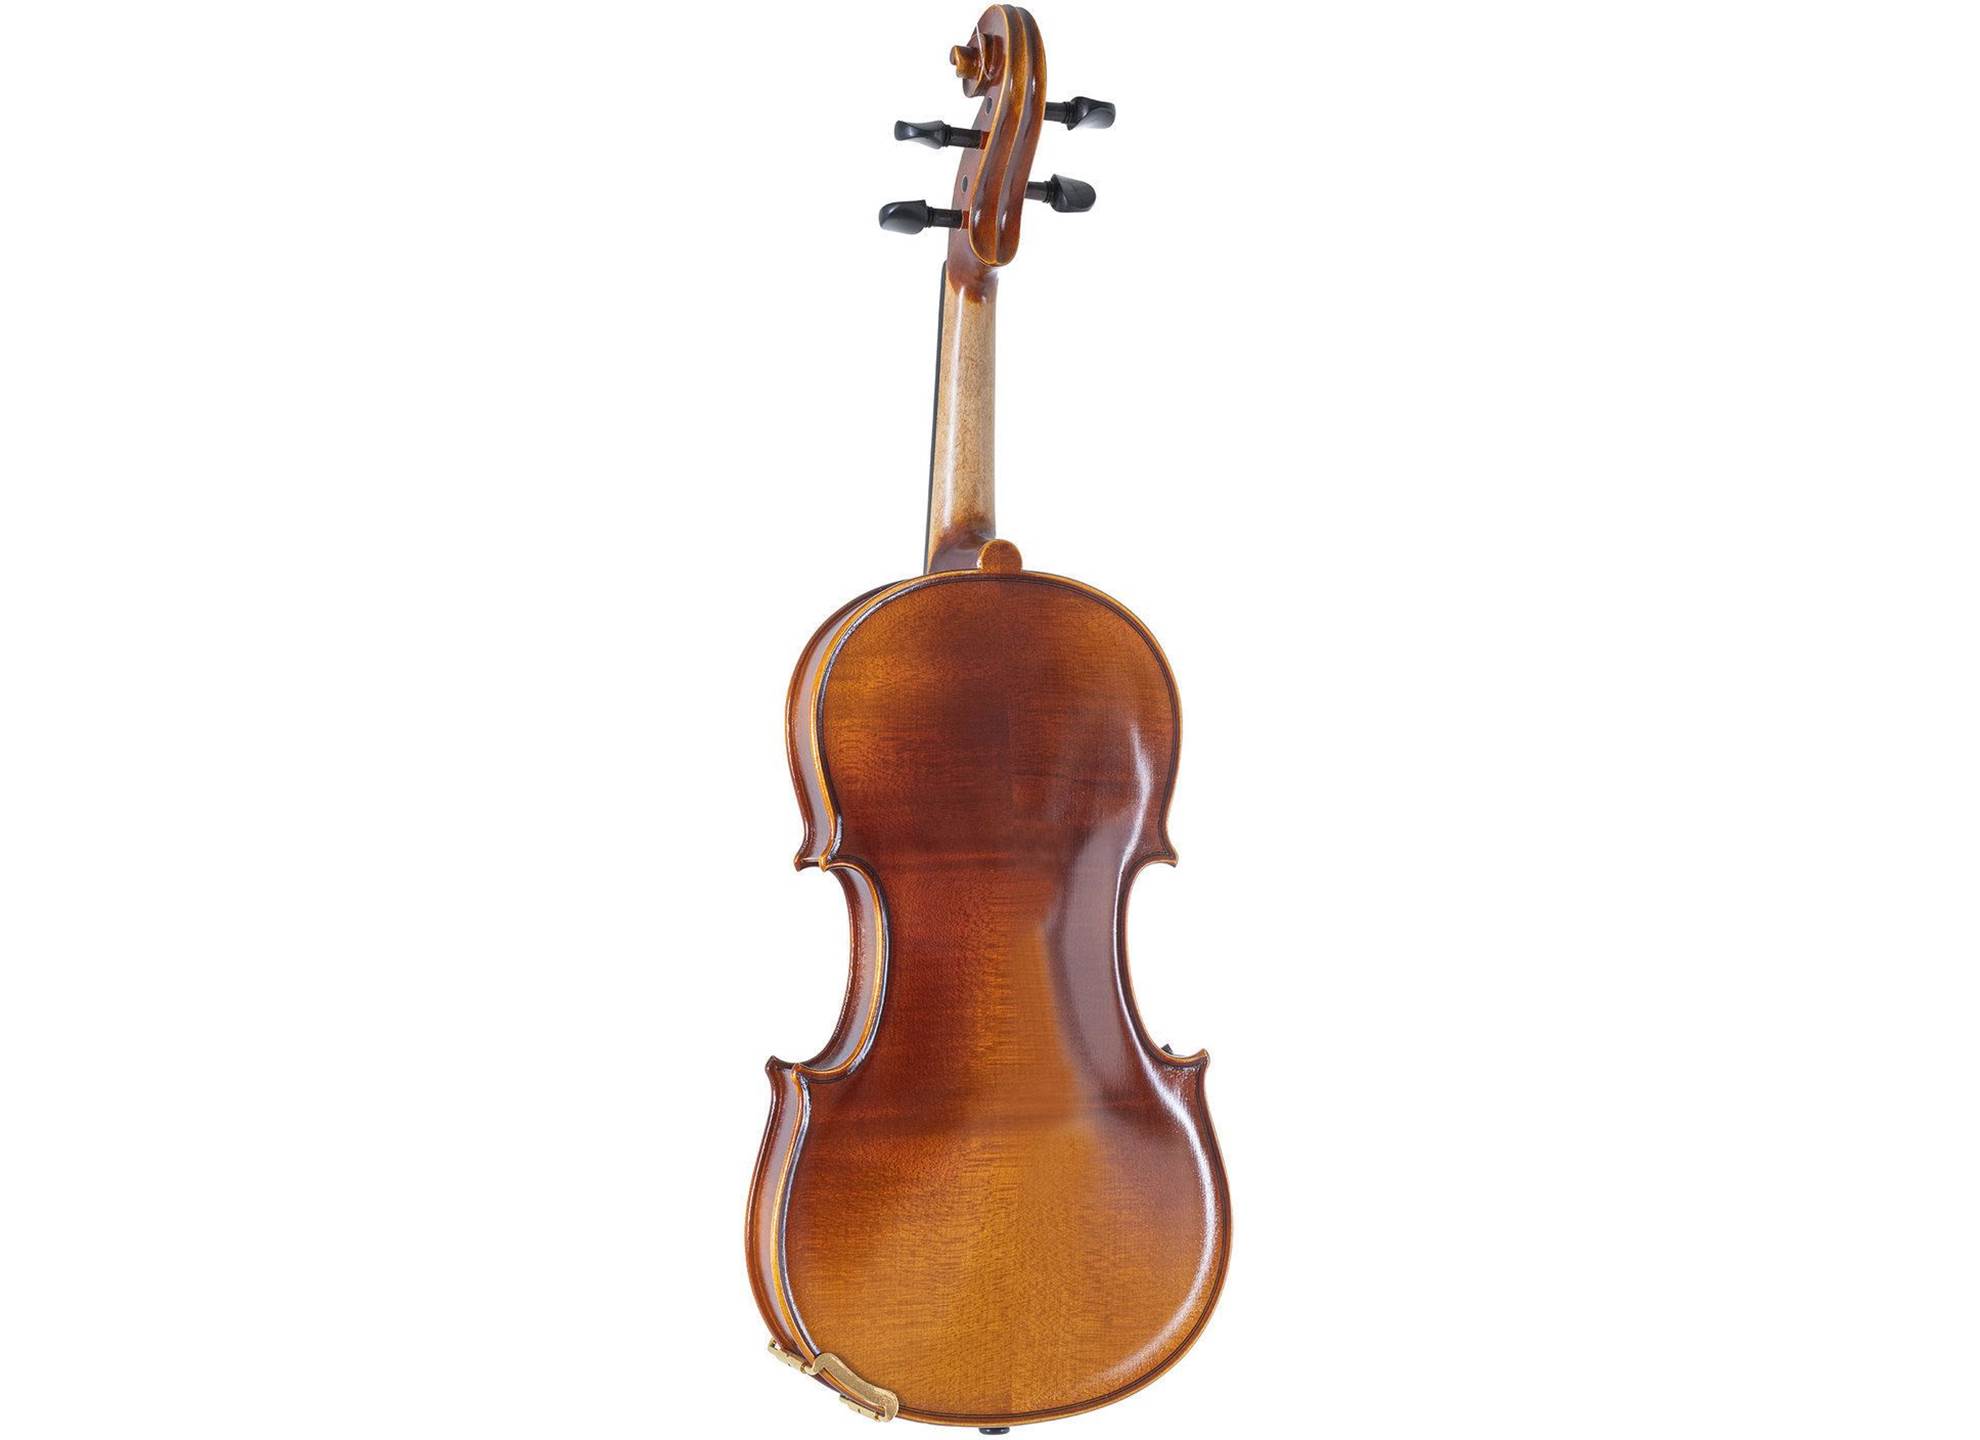 Violin Allegro-VL1 Lefthand Shaped Case 4/4